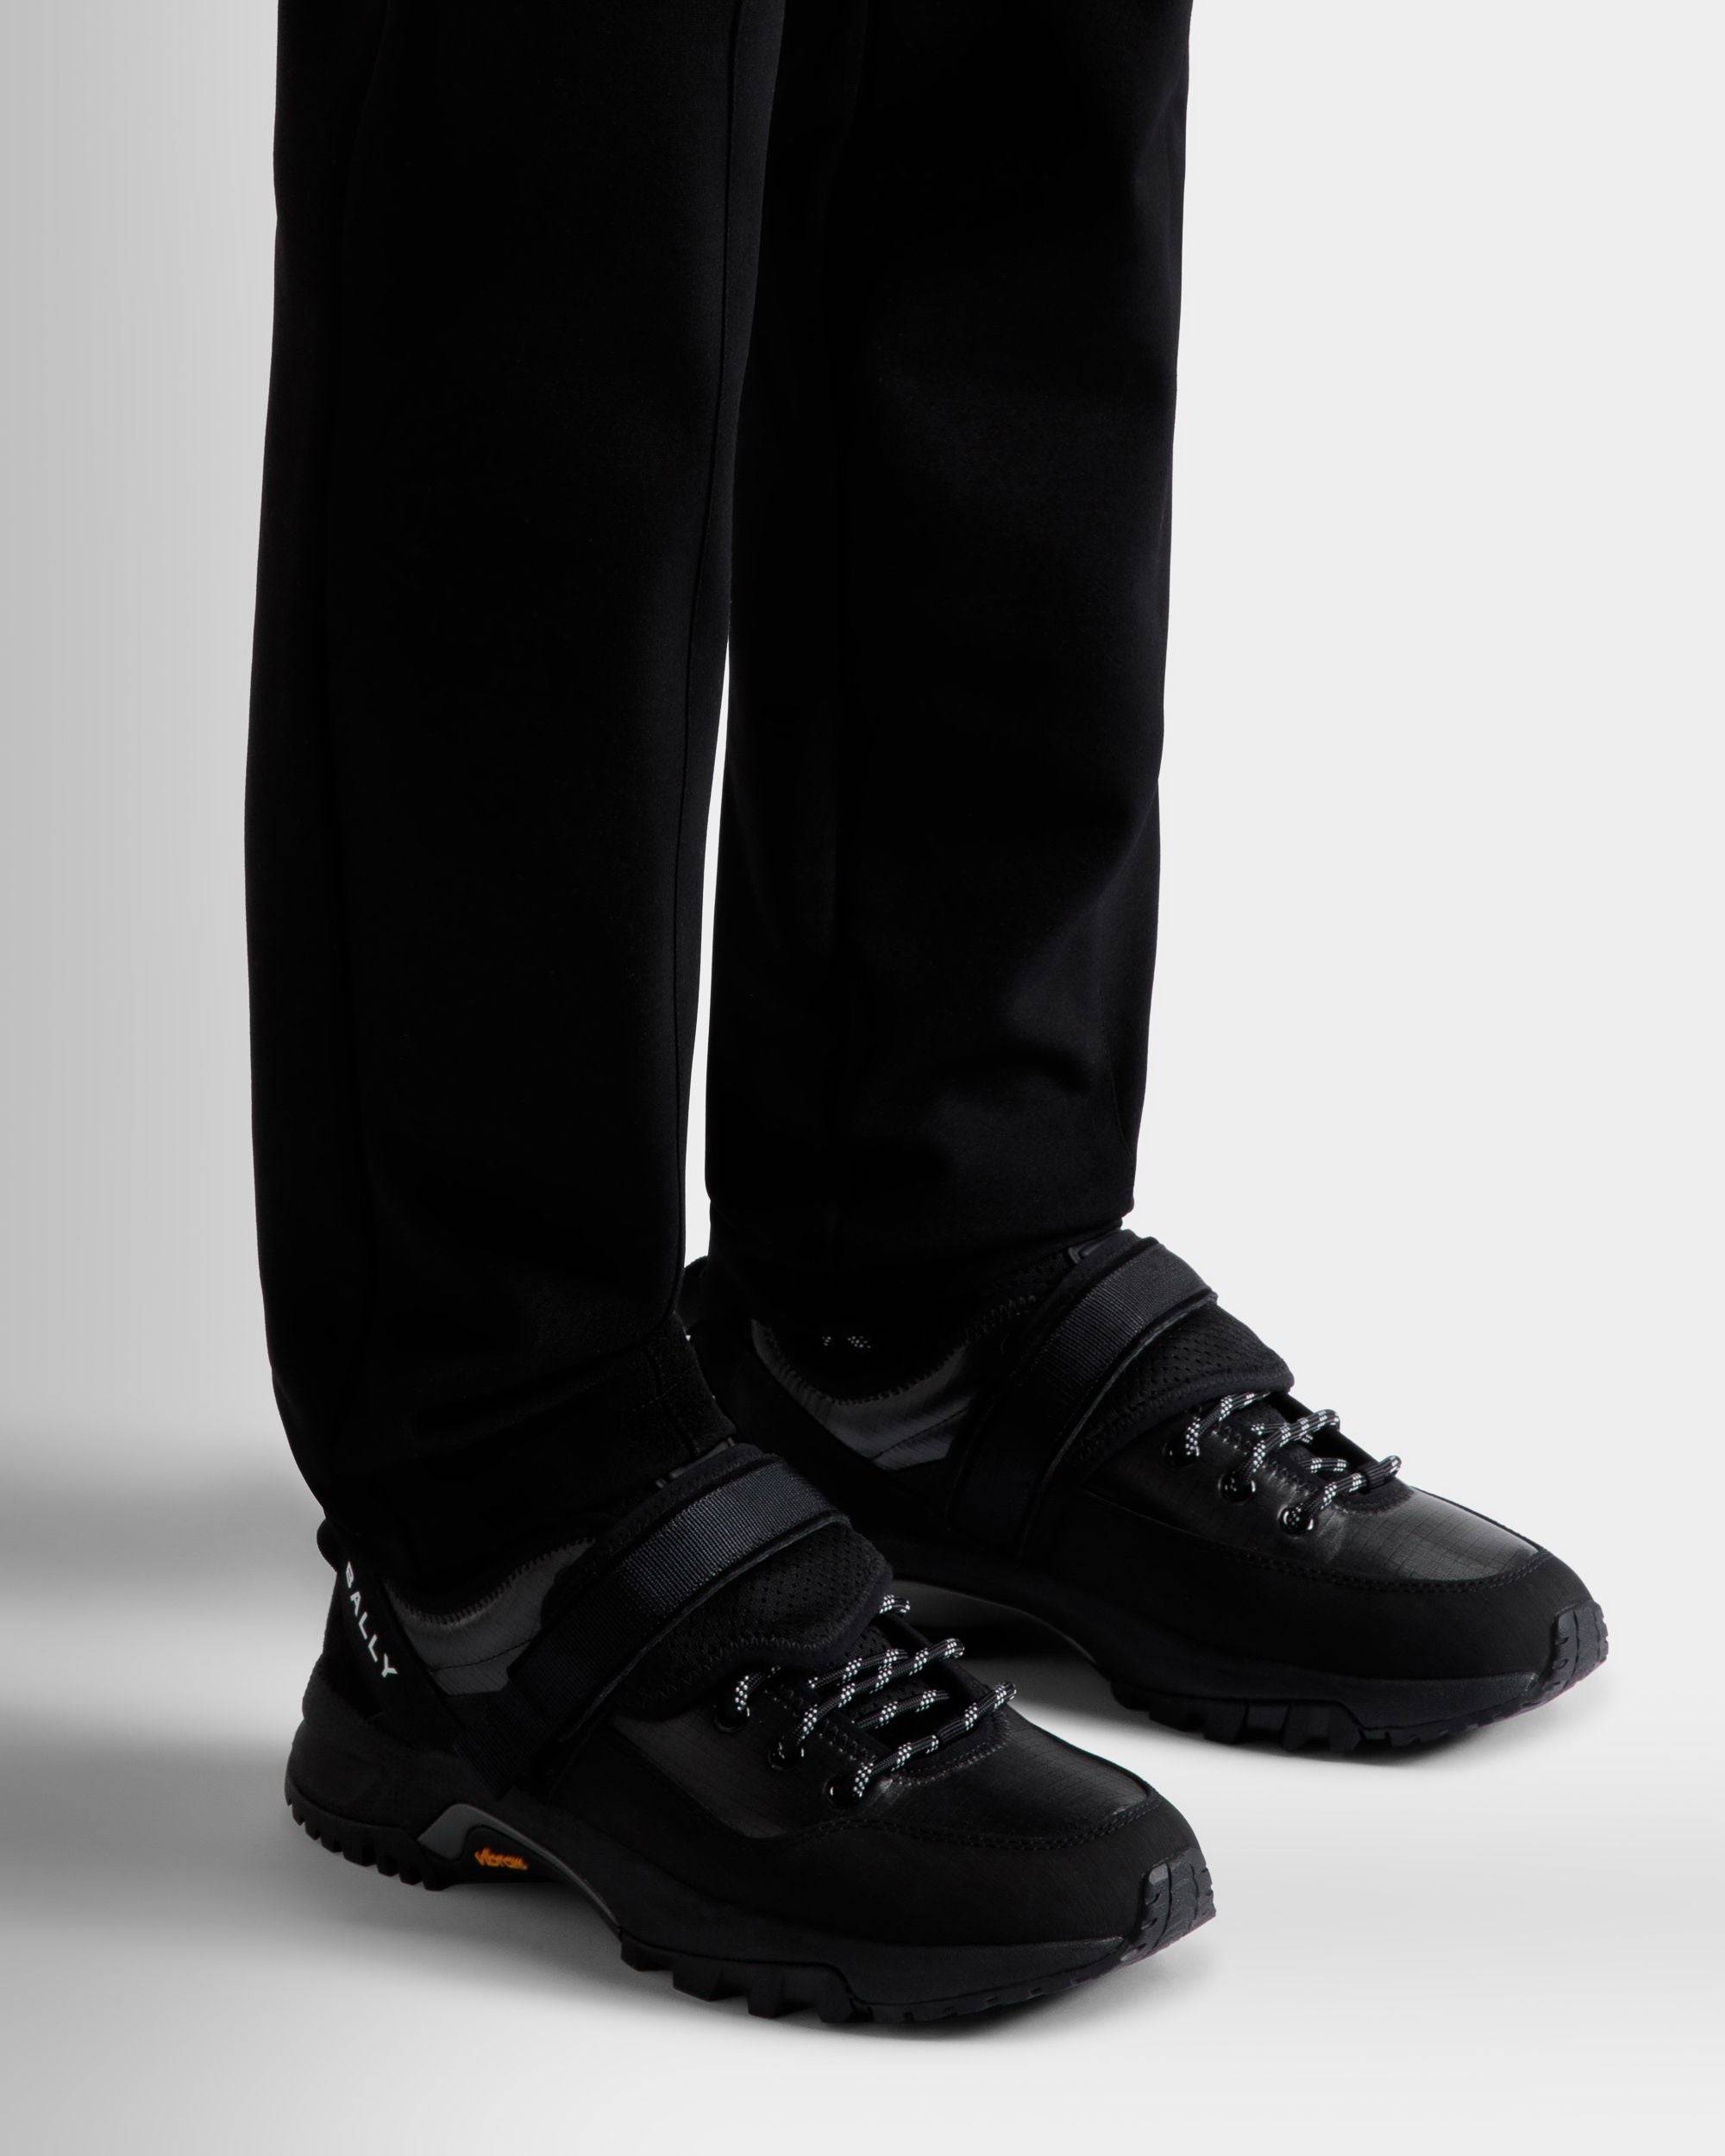 Faster | Herren-Sneaker aus schwarzem Nylon | Bally | Model getragen Nahaufnahme